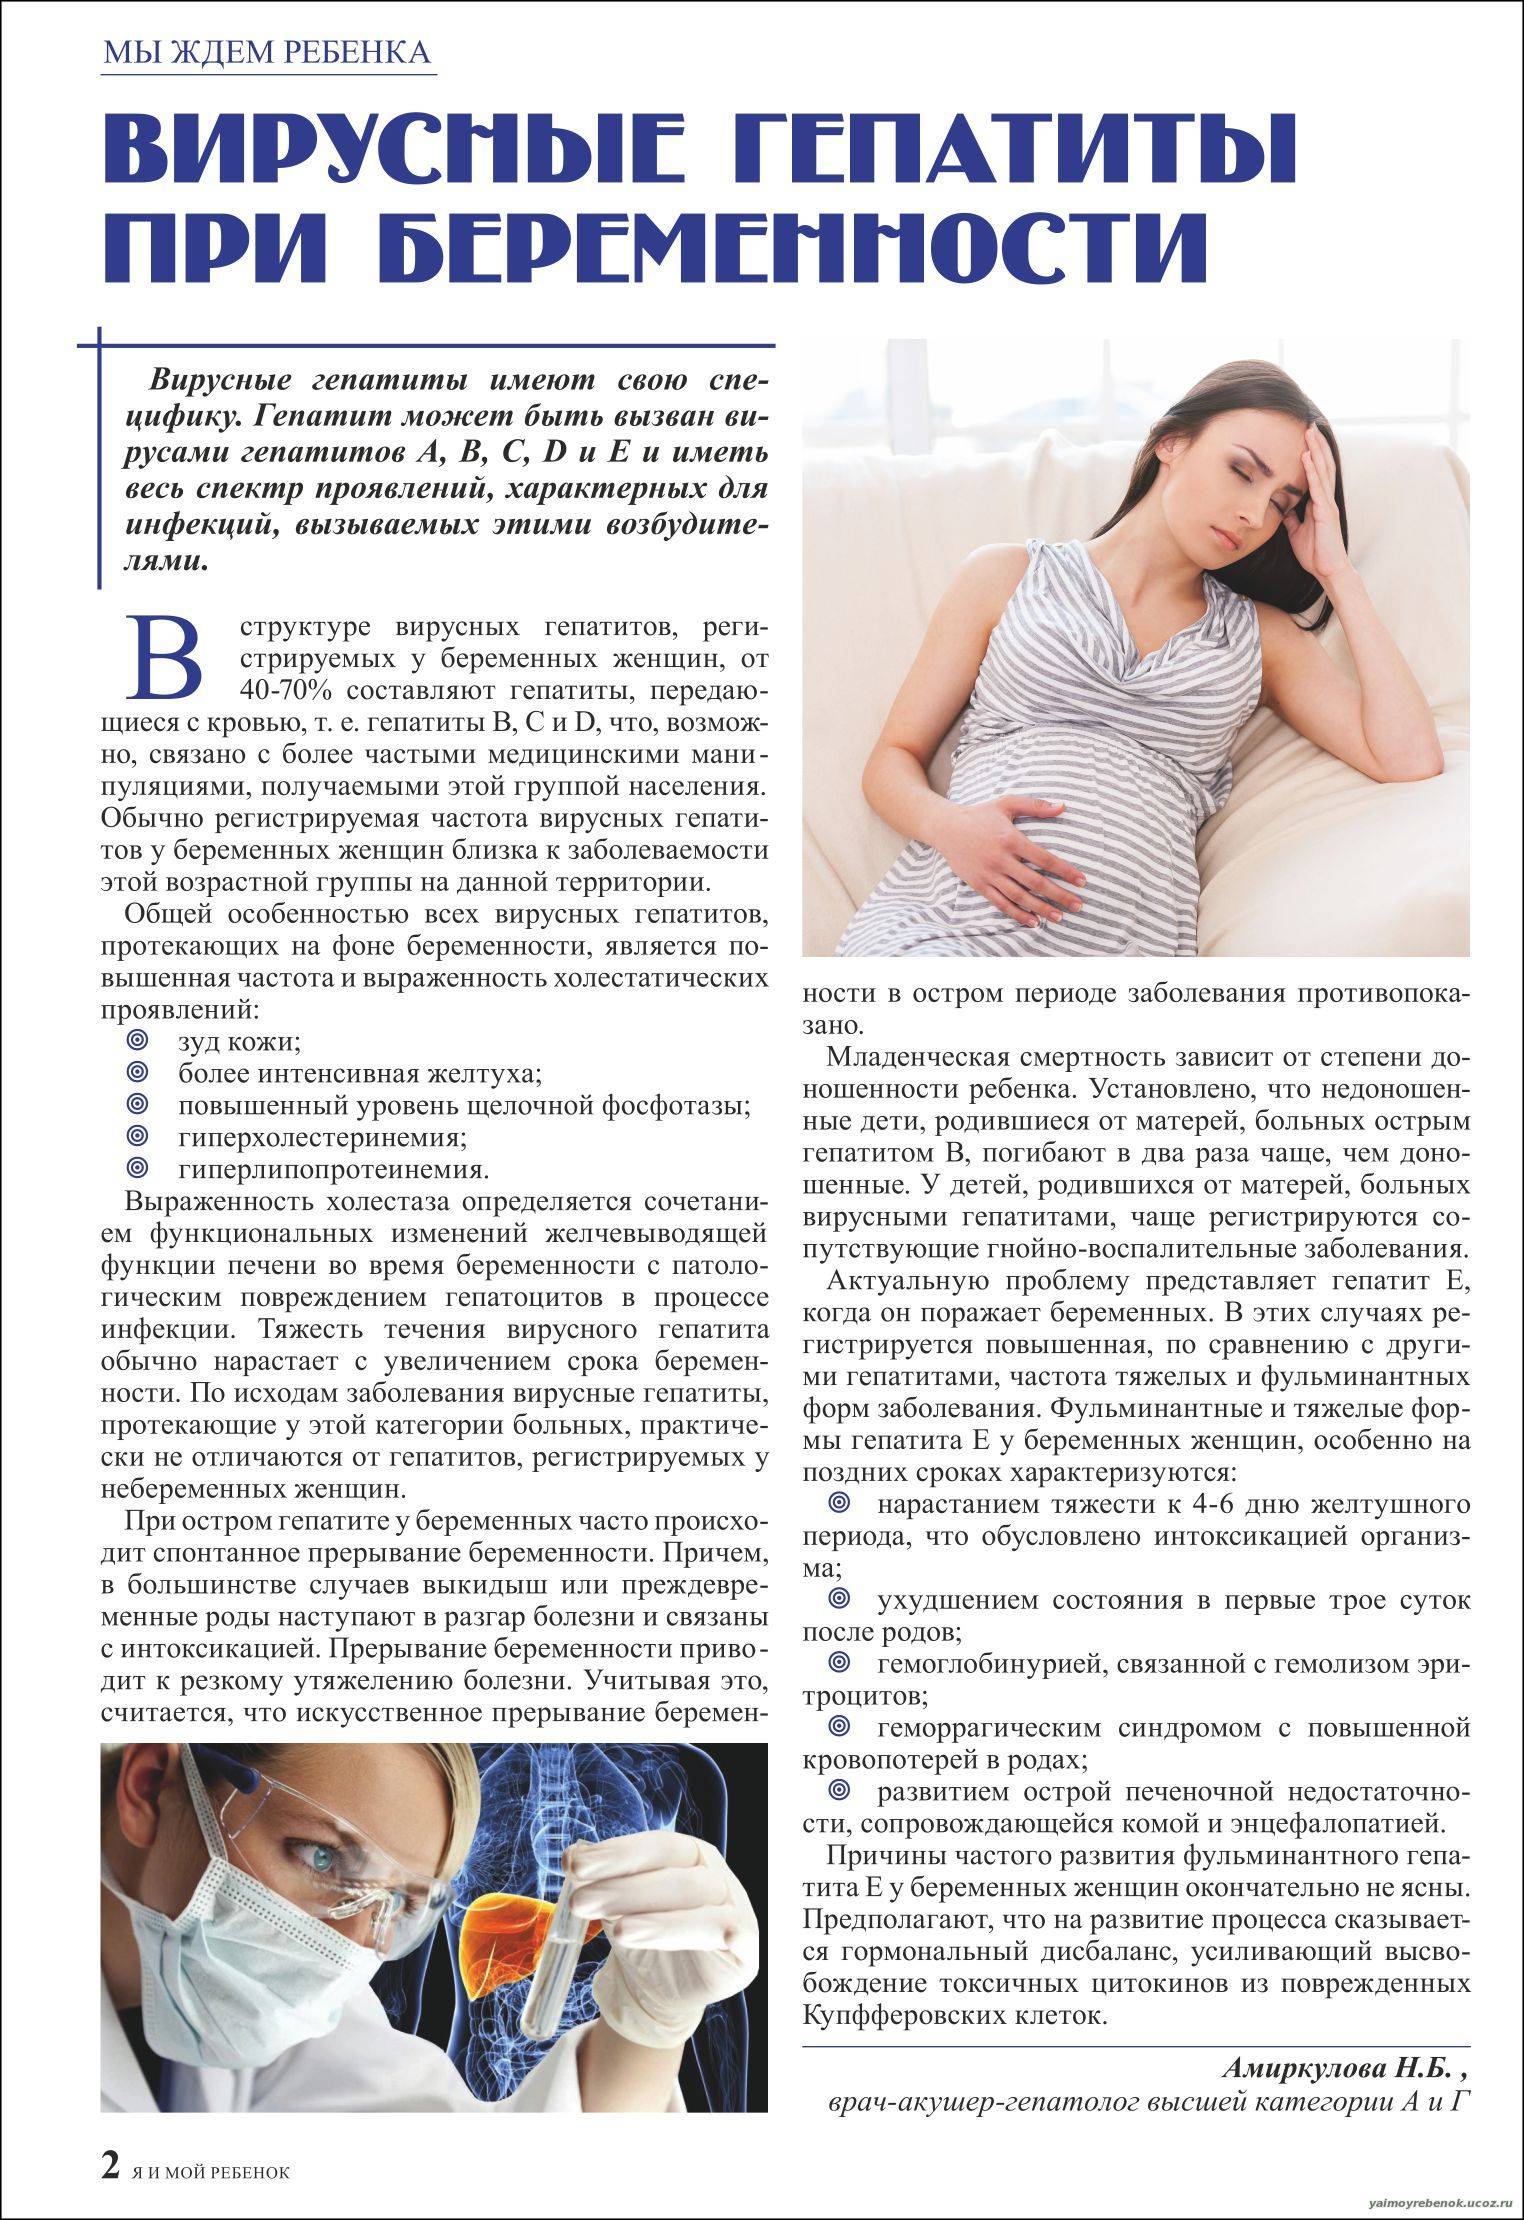 Хронический тонзиллит при беременности: последствия для ребенка - живите без боли